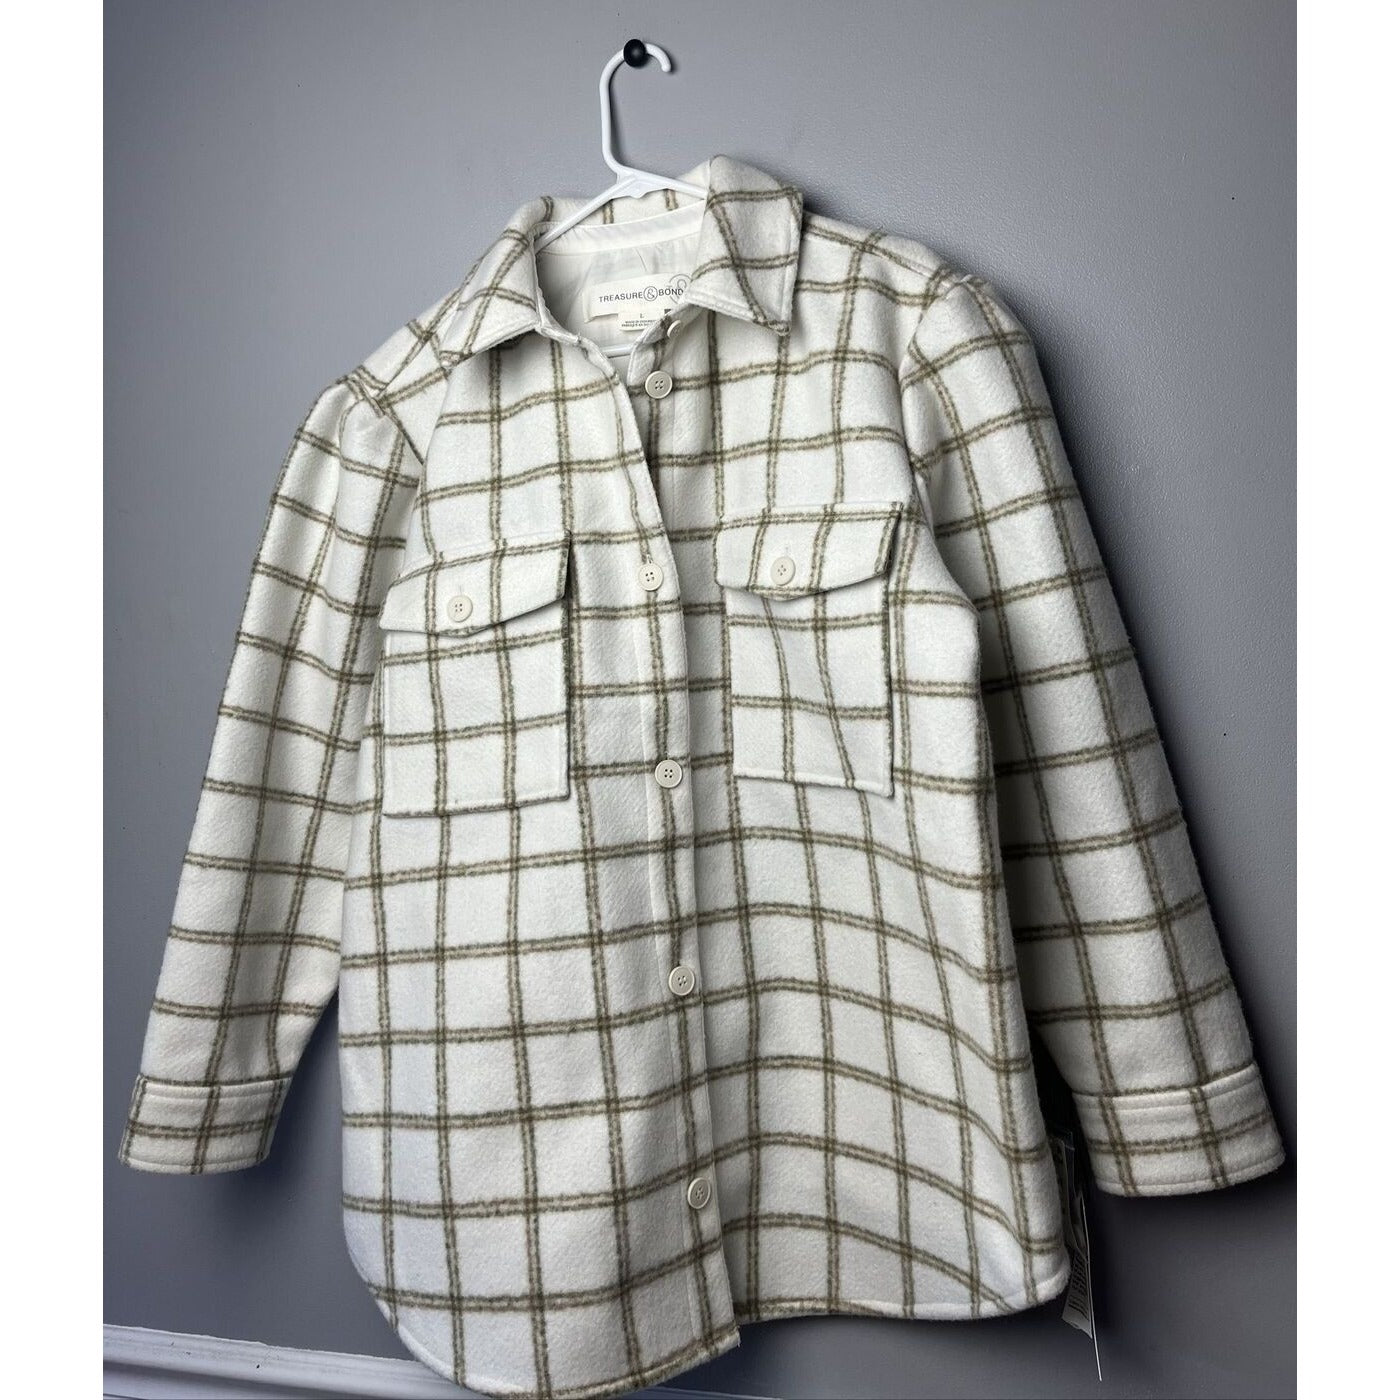 Treasure & Bond Plaid Puff Sleeve Shirt Jacket Ivory Plaid Button Up MSRP $129